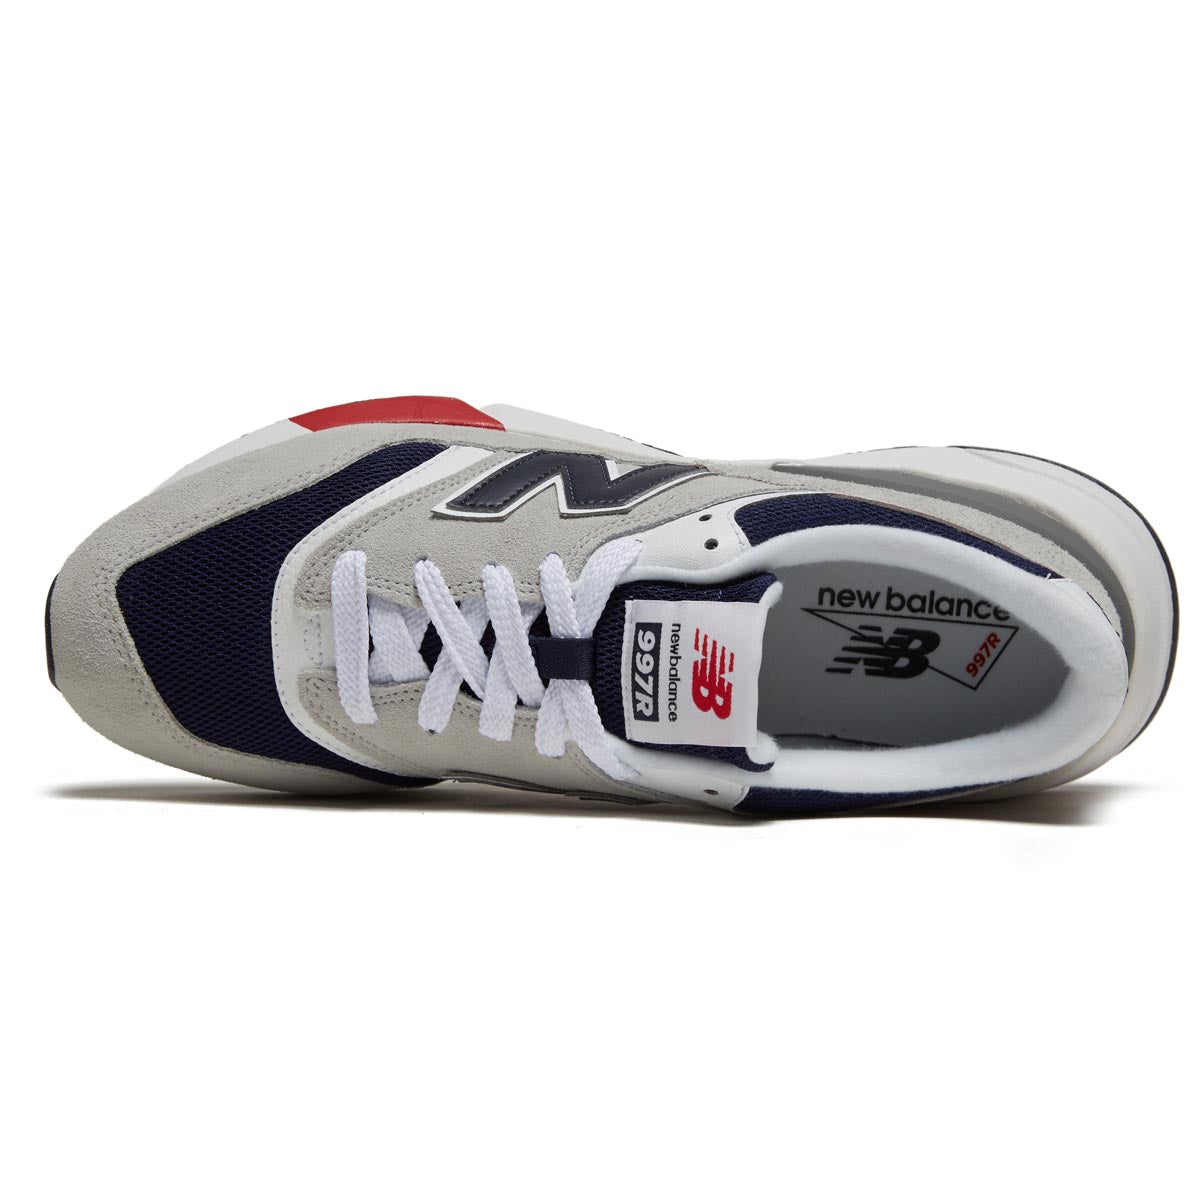 New Balance 997R Shoes - Brighton Grey image 3